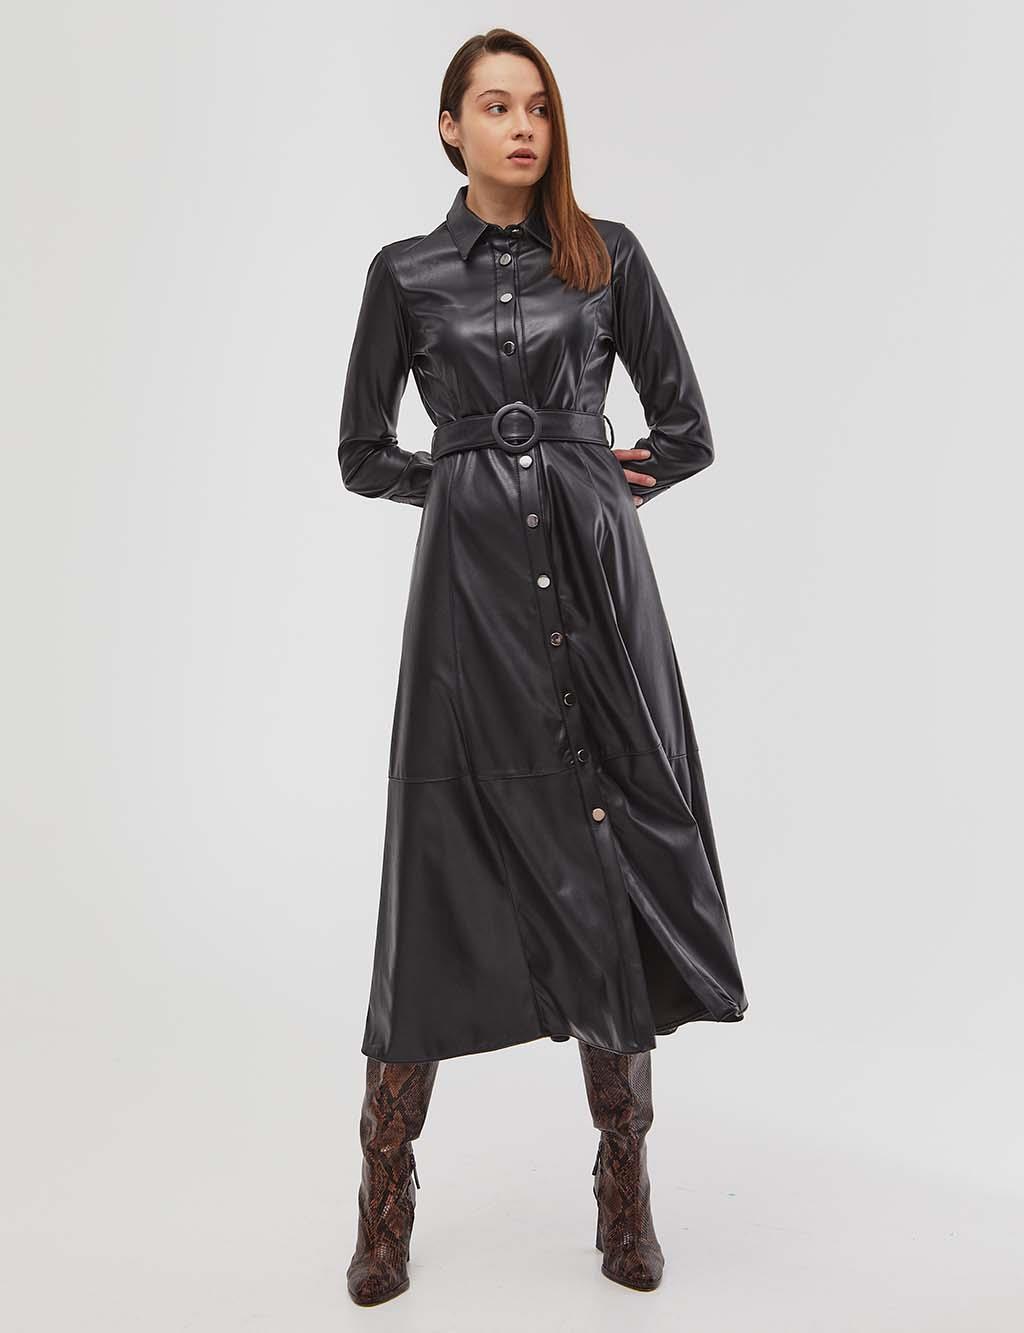 Metal Button Closure Leather Dress Black